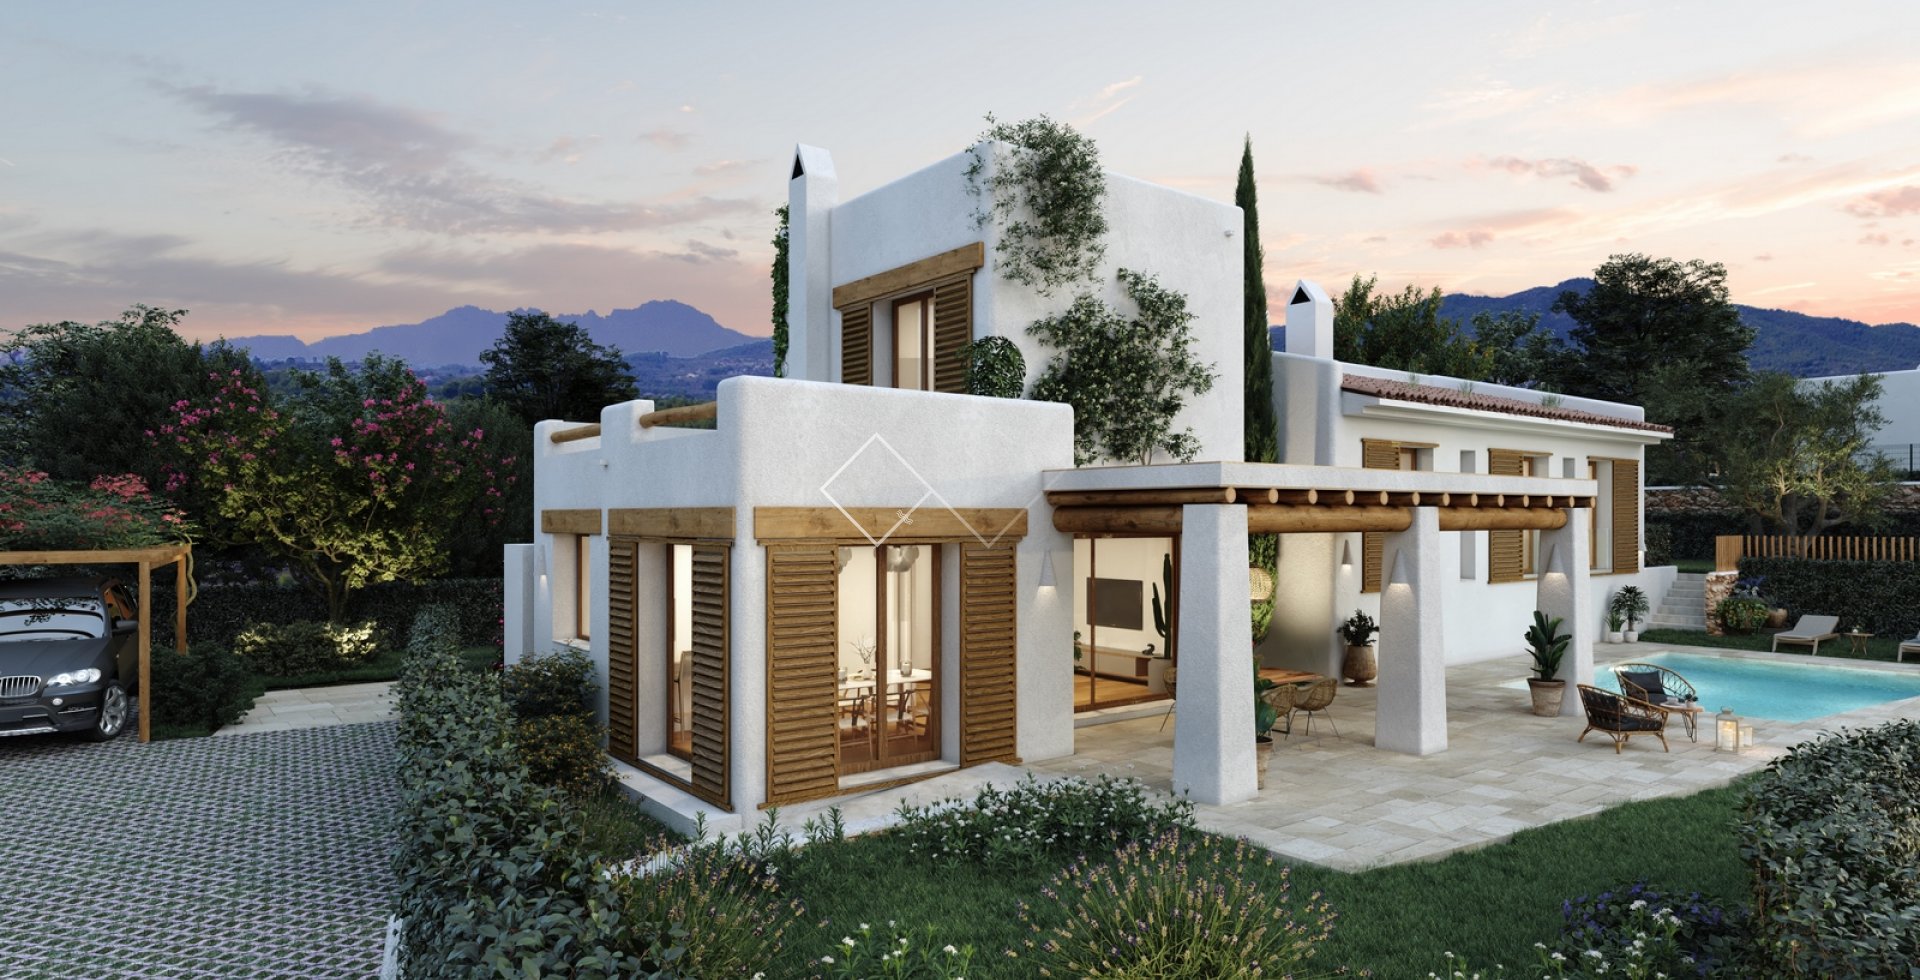 Lomas - Ibiza style villa for sale in Javea with Montgo views